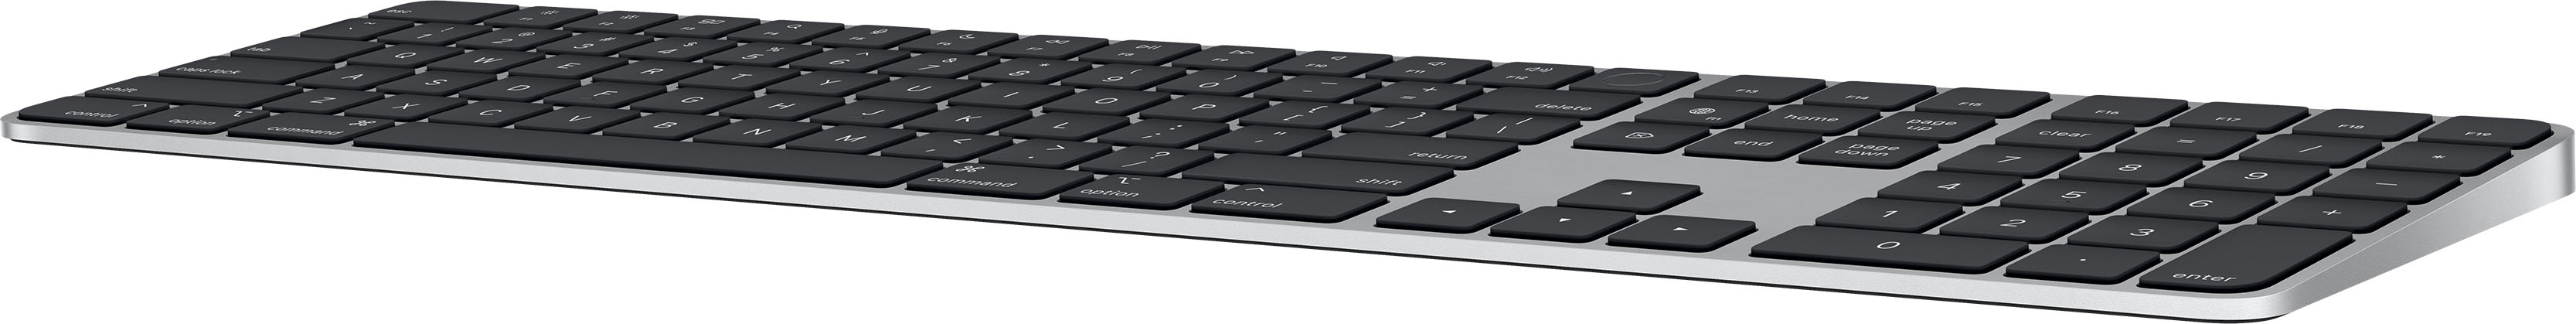 Angle View: RETRO CLASSIC BT MK-RETRO-L-02B-US Full-size Bluetooth Mechanical Azio Typelit Switch Keyboard with Back Lighting - Posh